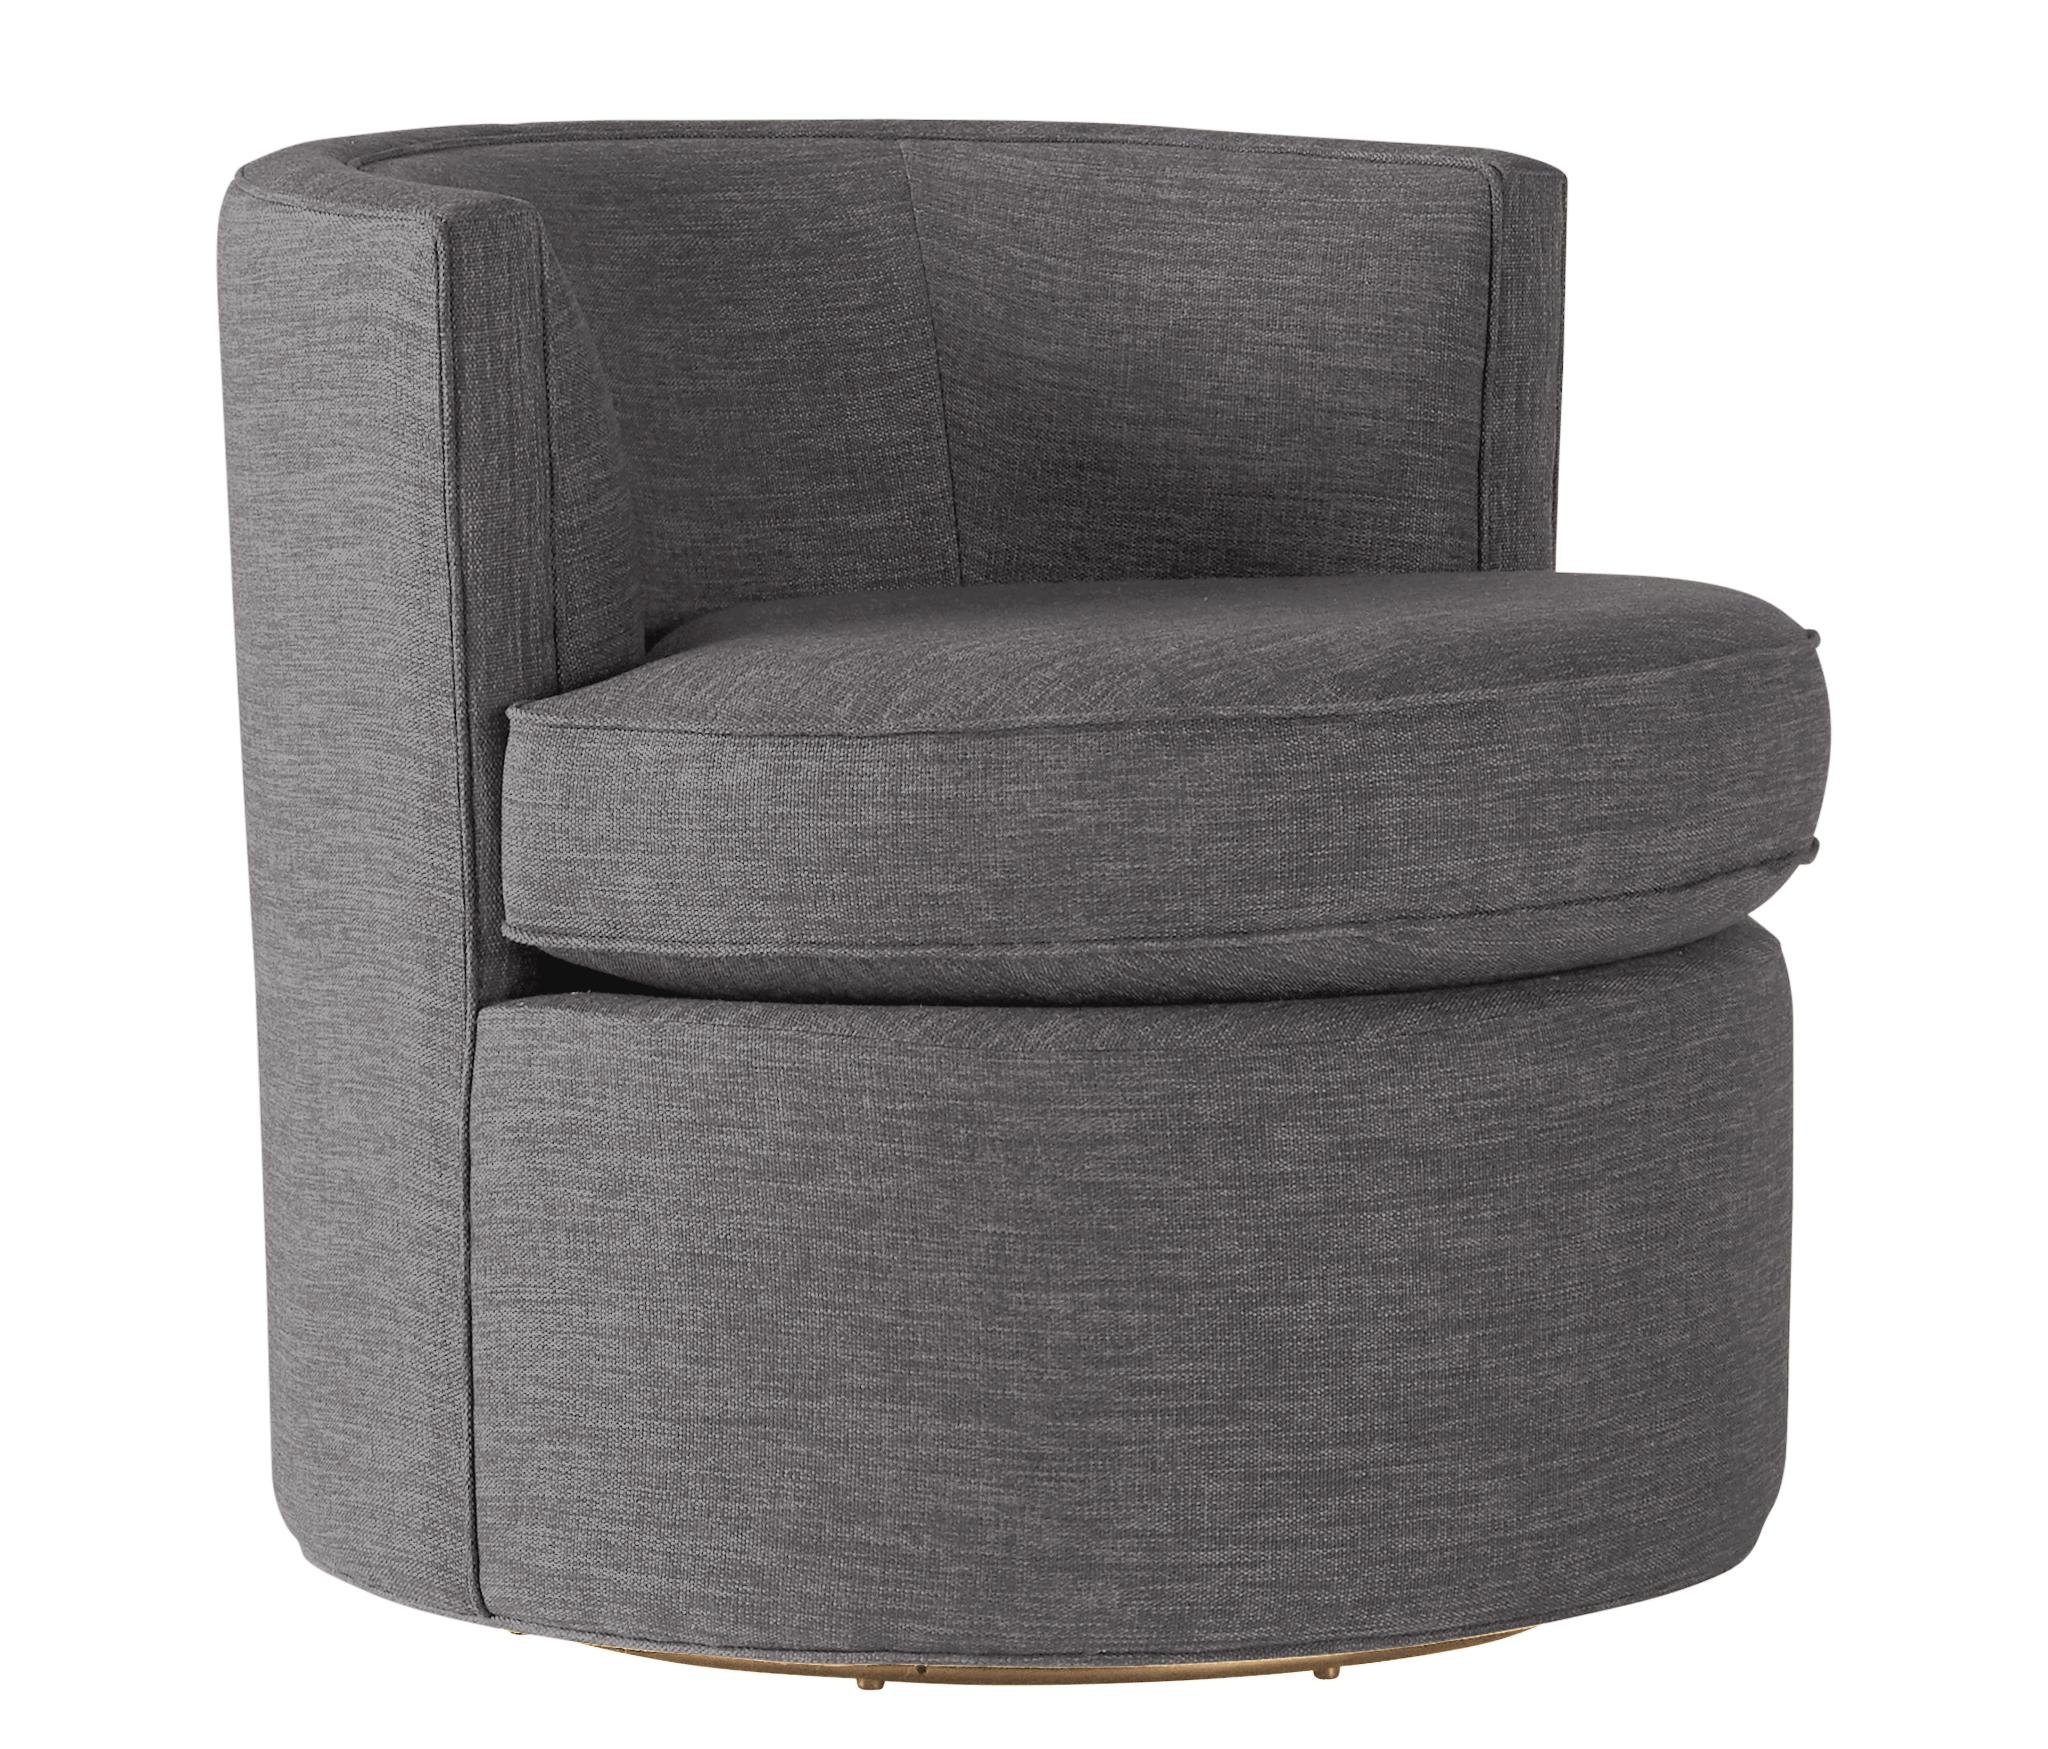 Gray Carly Mid Century Modern Swivel Chair - Royale Ash - Image 1